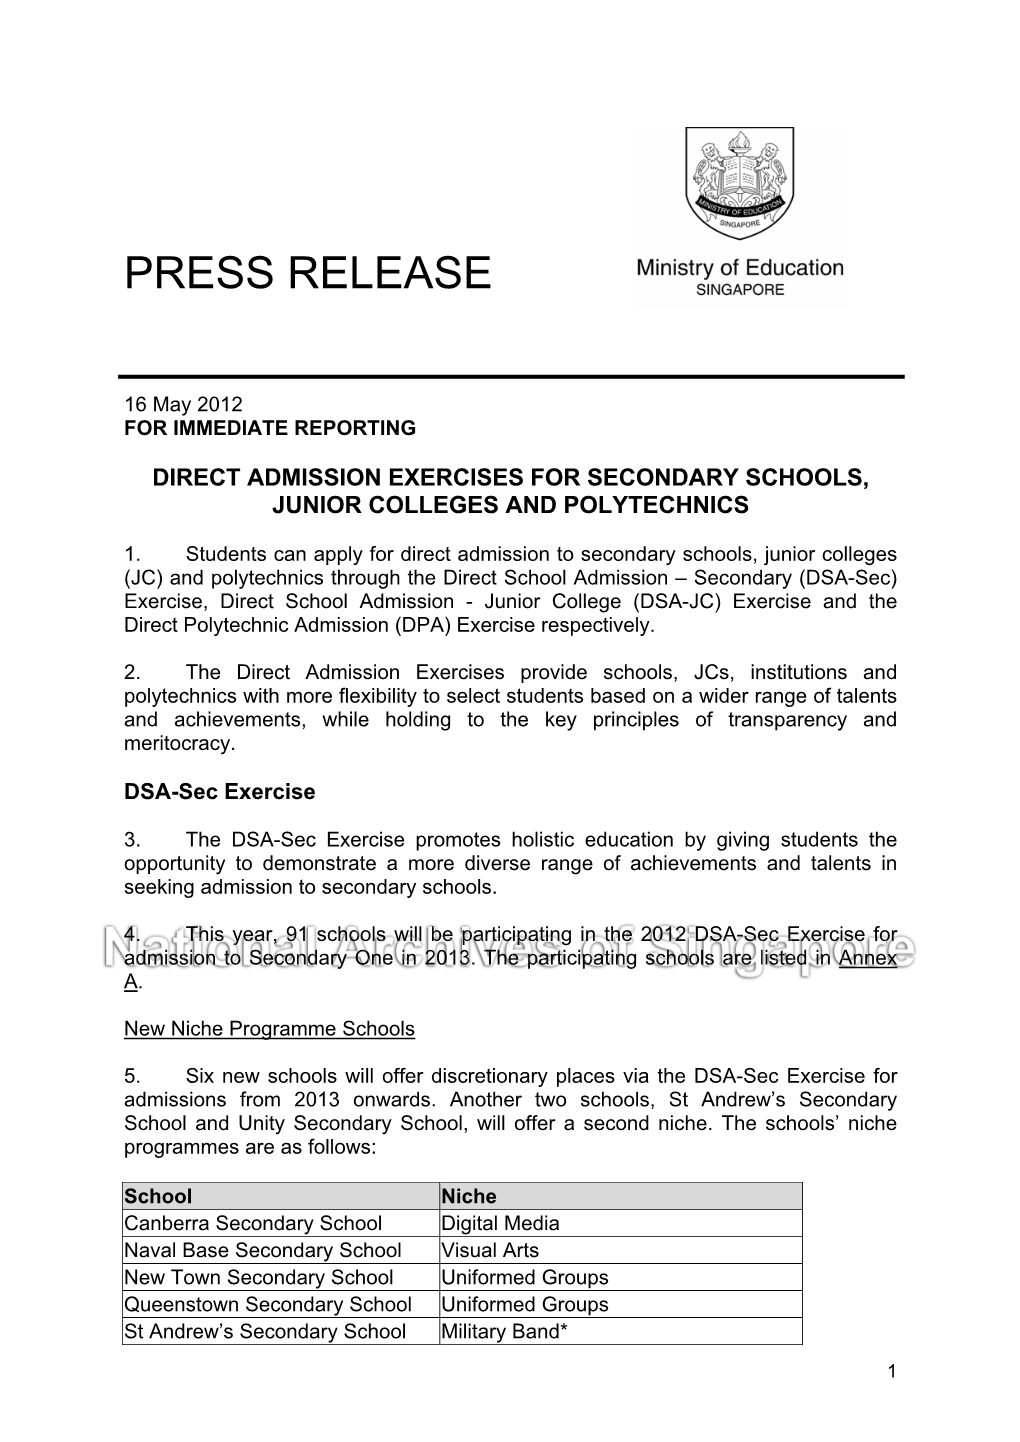 2012 Press Release on Dsa-Sec Dsa-Jc and Dpa Exercises